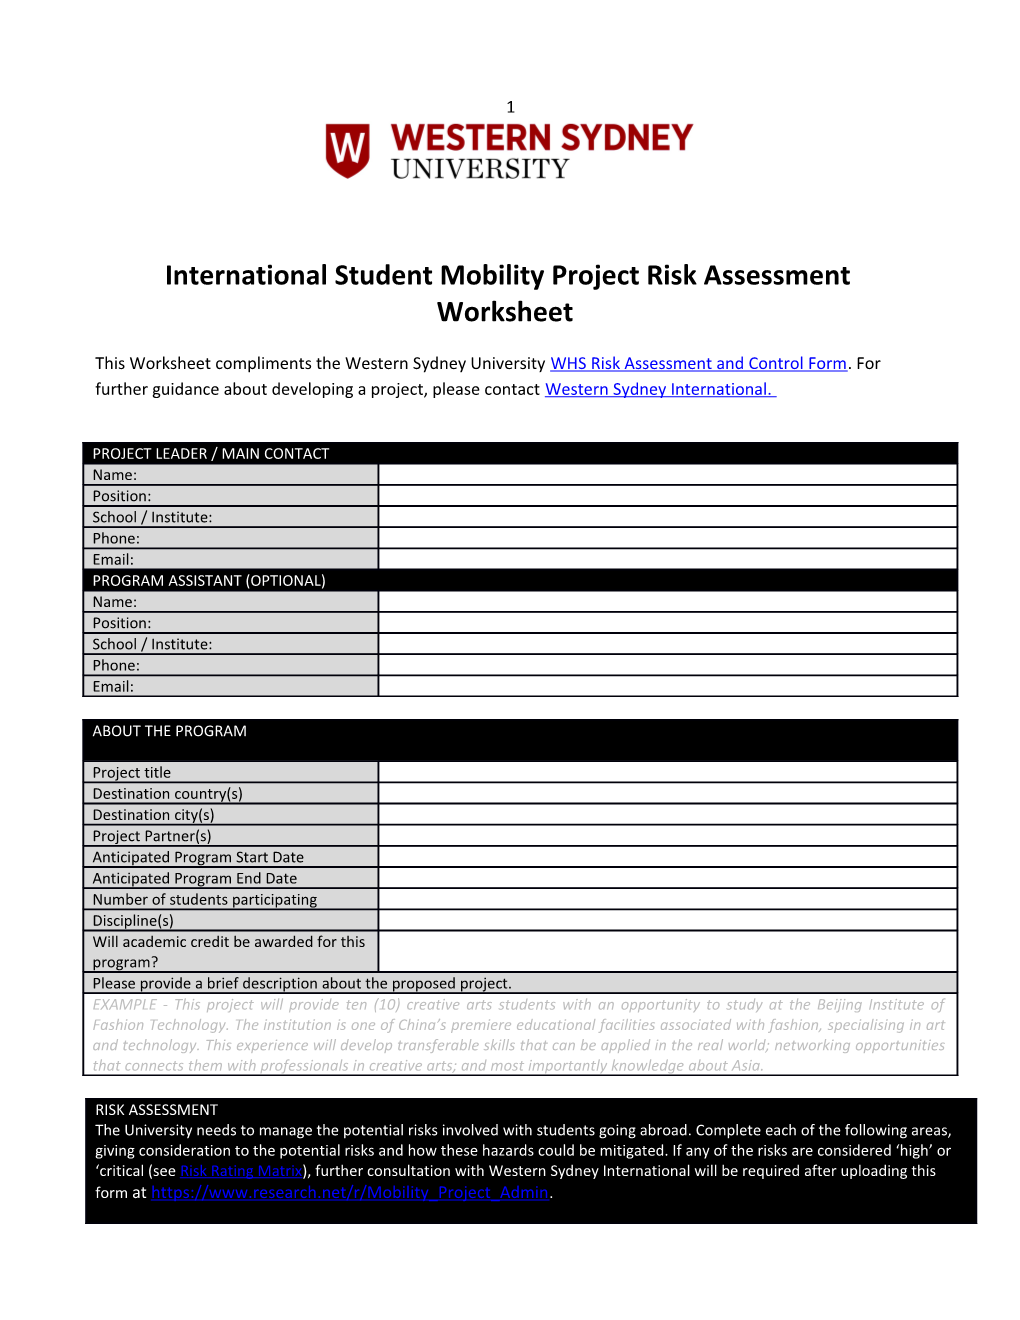 International Student Mobility Project Risk Assessment Worksheet